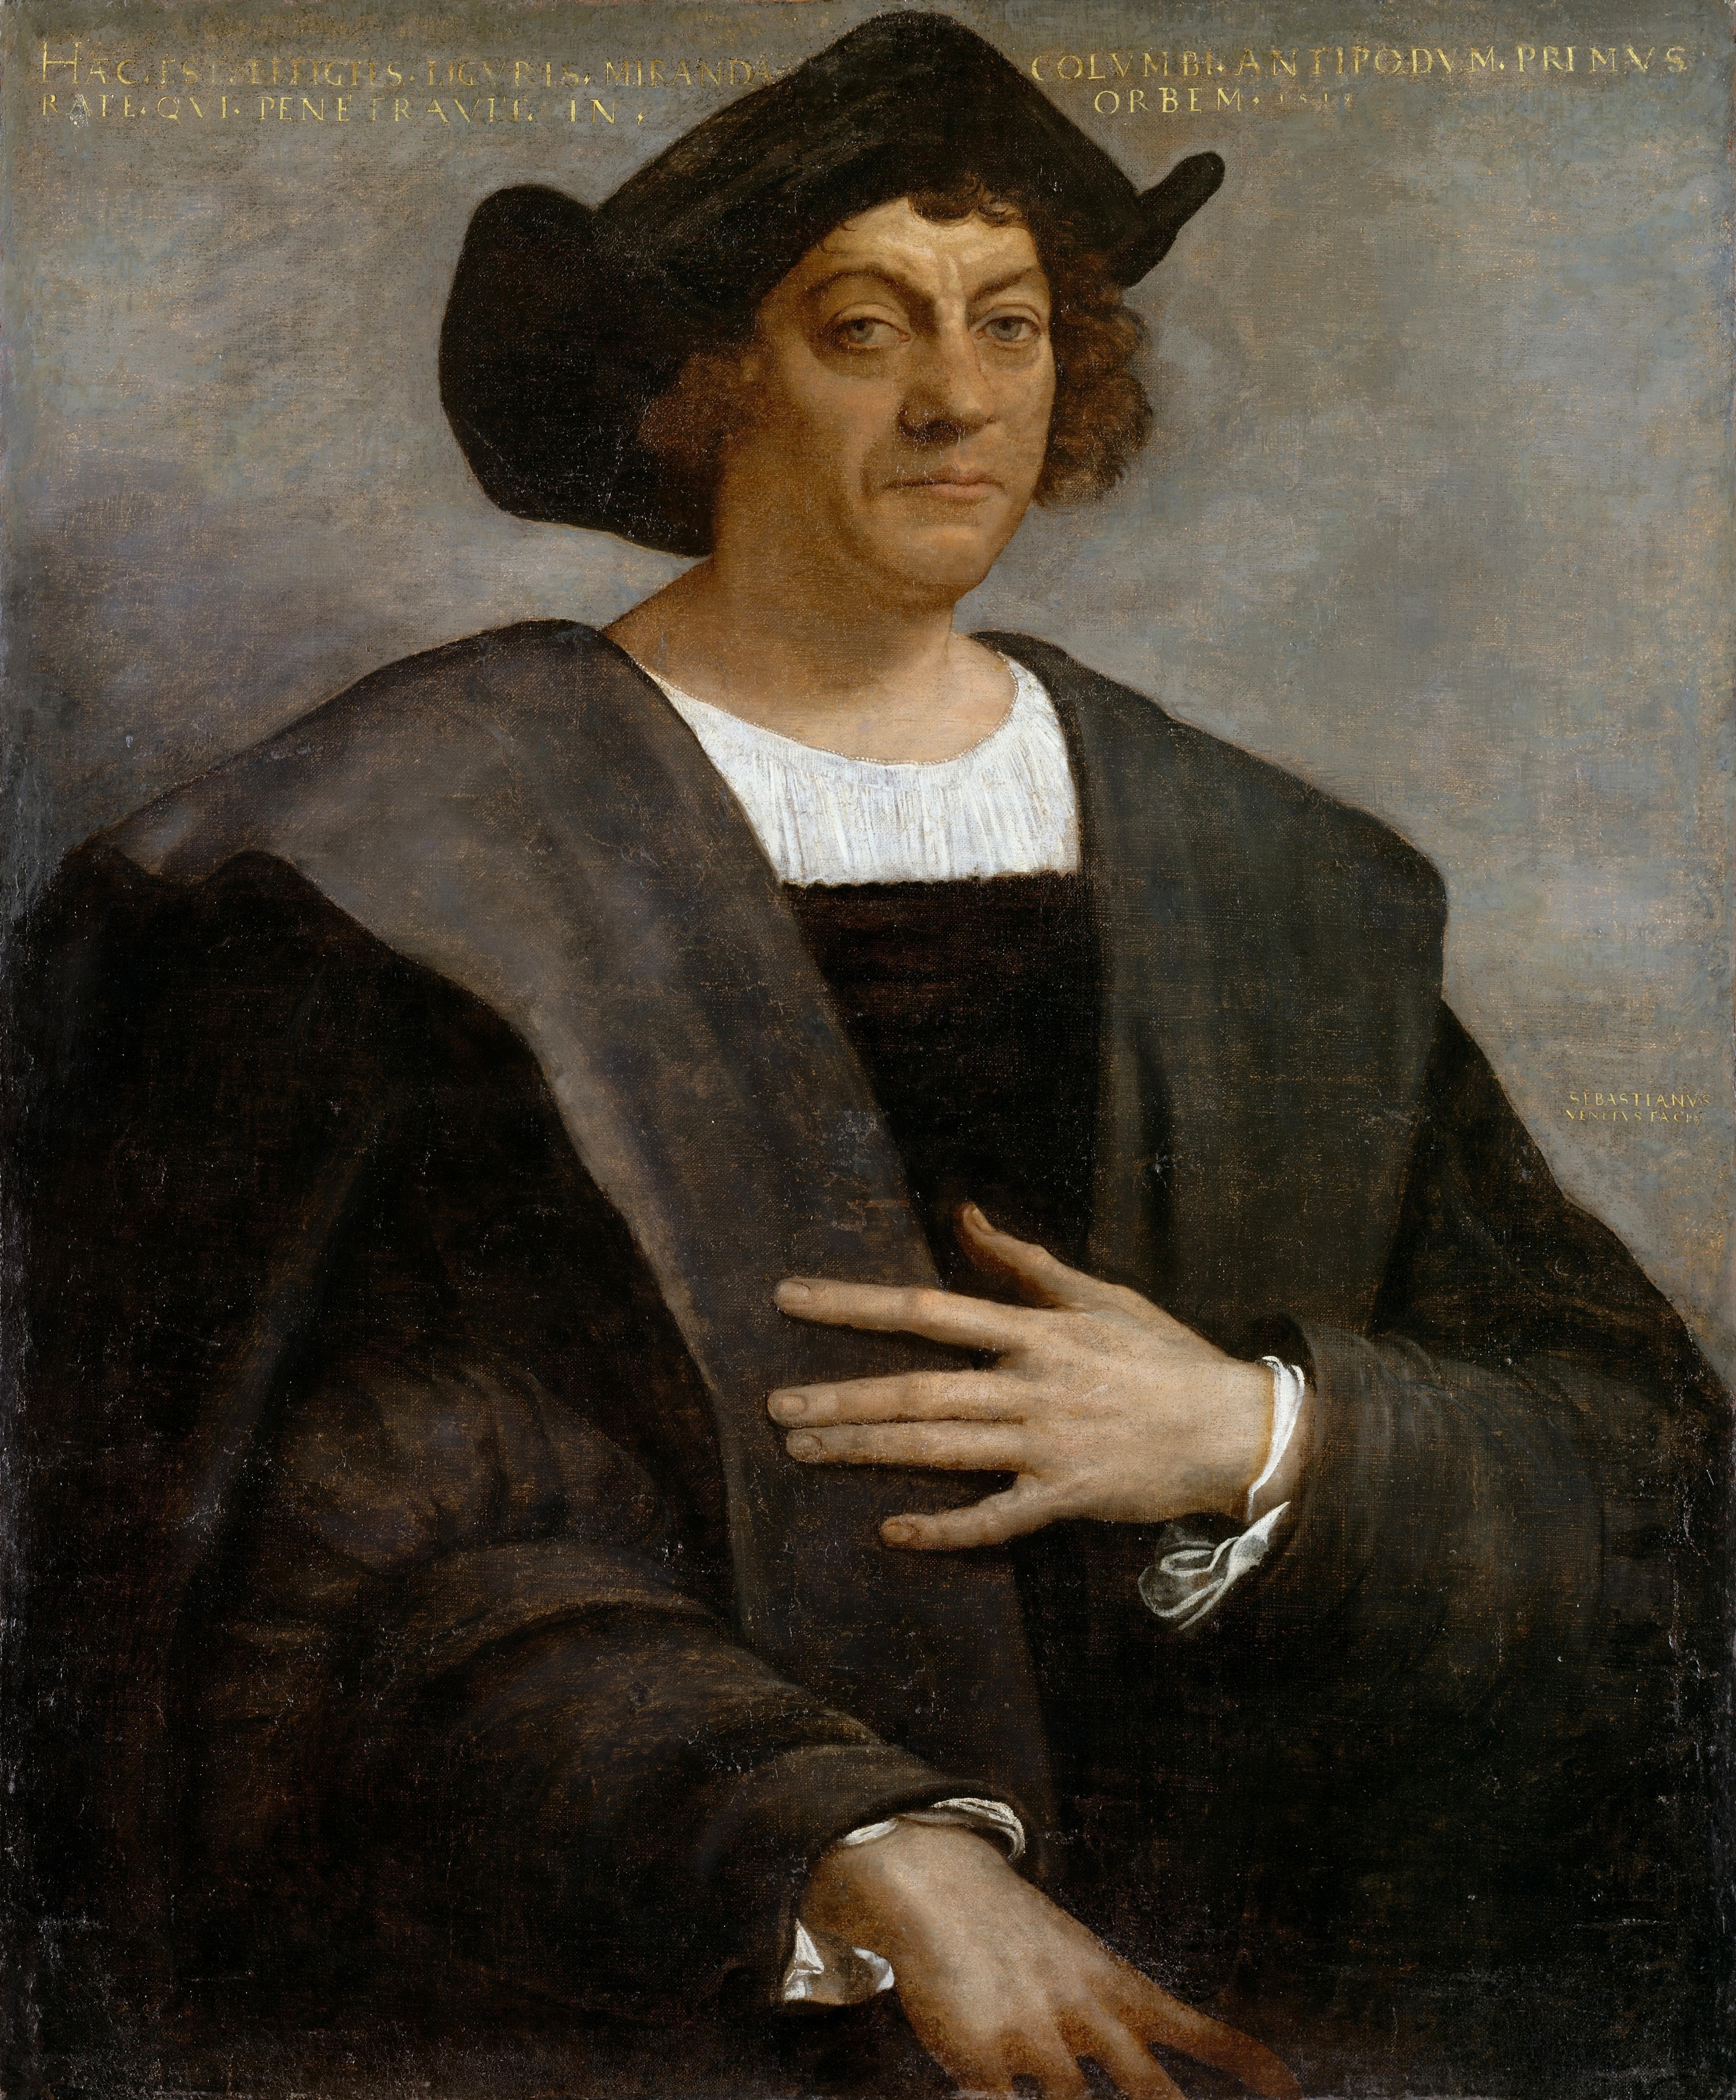 Christopher Columbus?